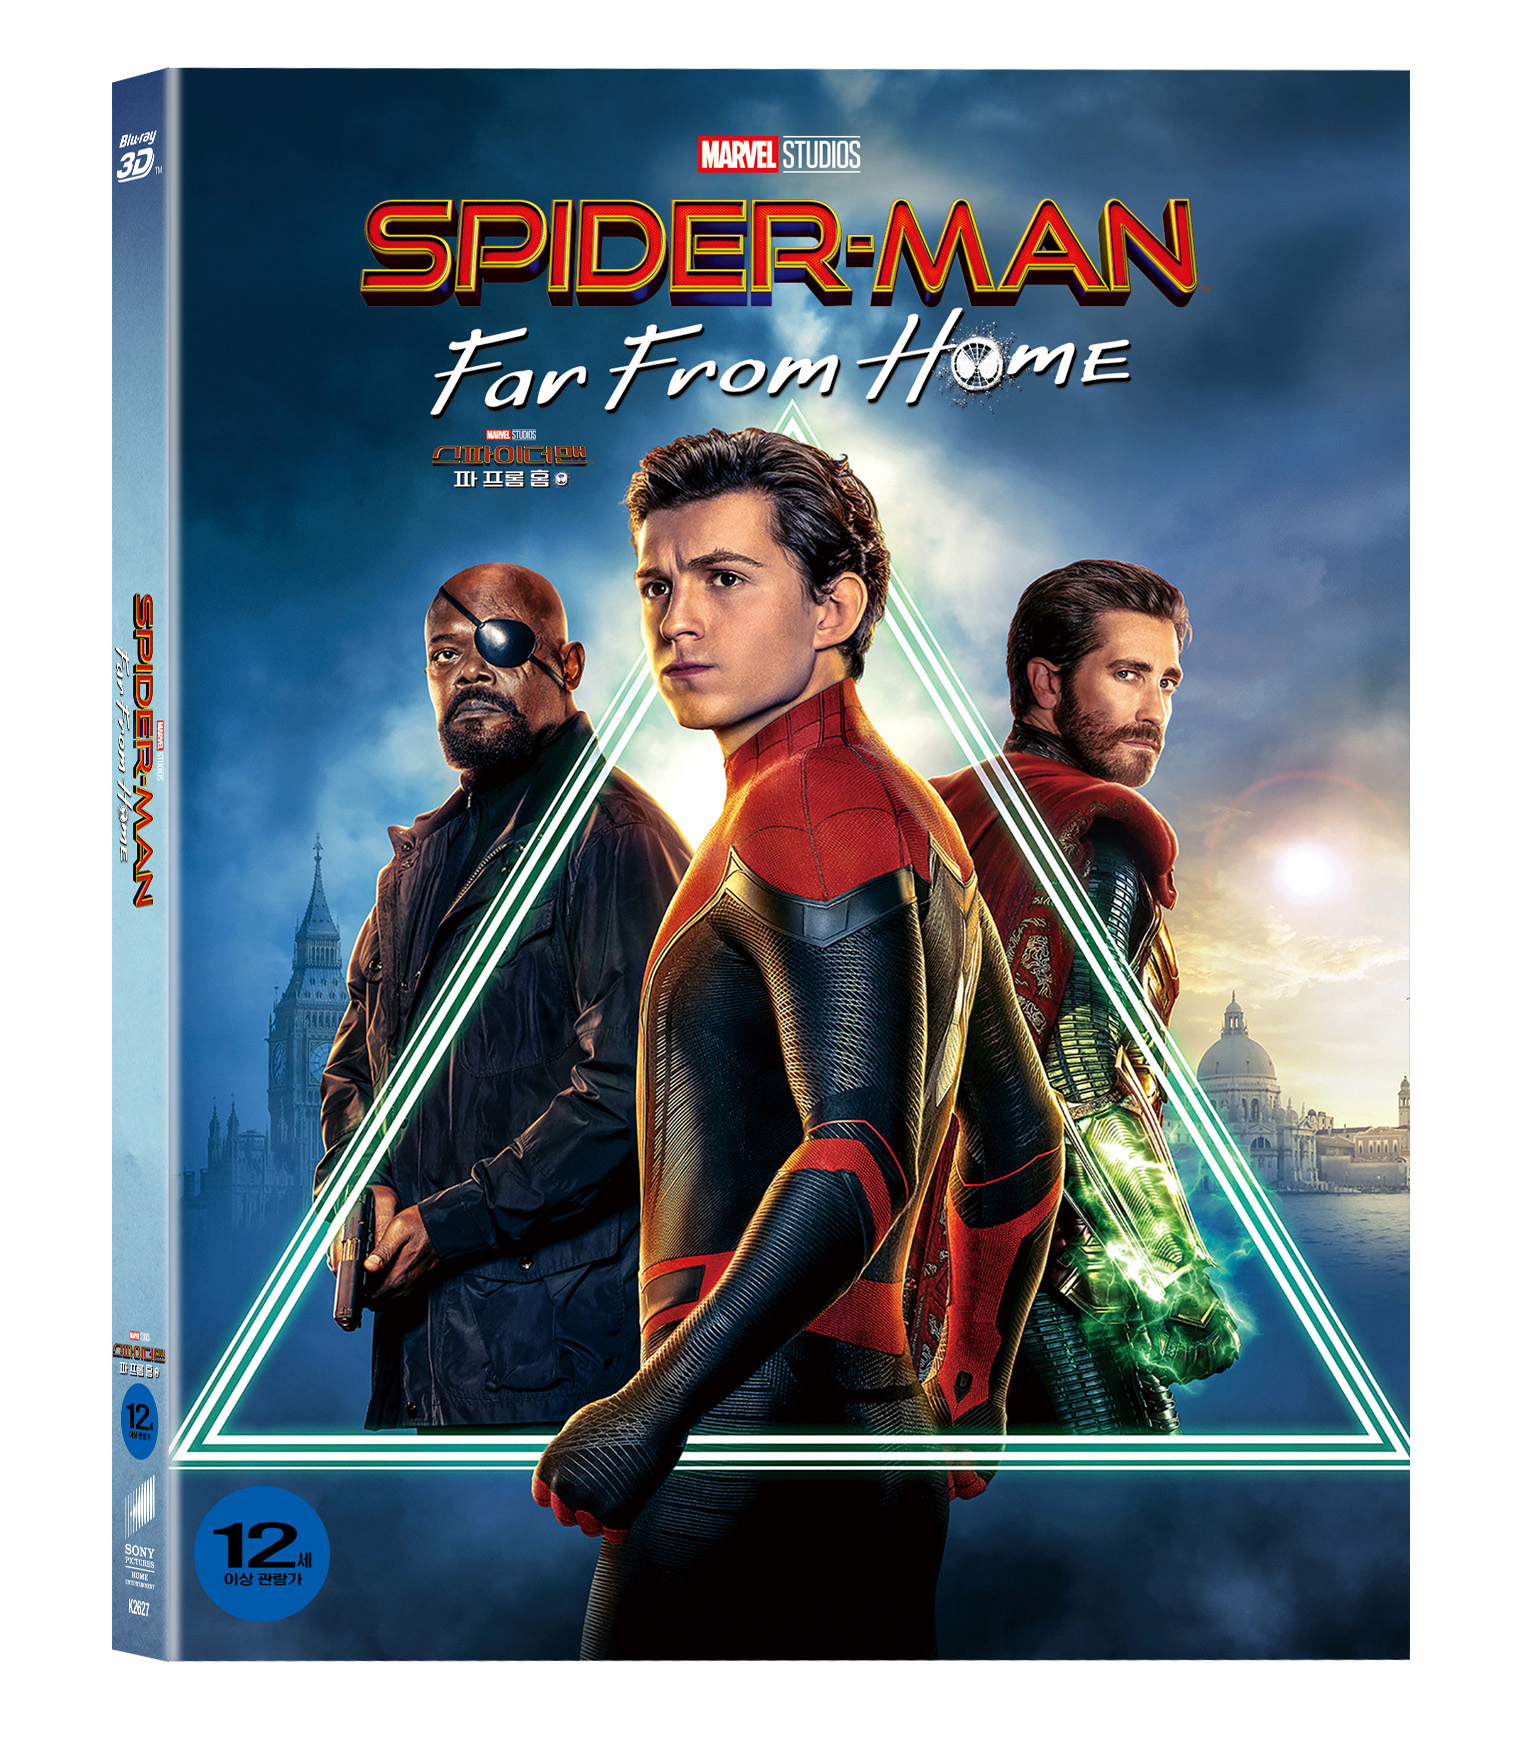 [Blu-ray] Spider-Man: Far From Home Slipcase(3disc: 3D + 2D + Bonus Disc) Limited Editon